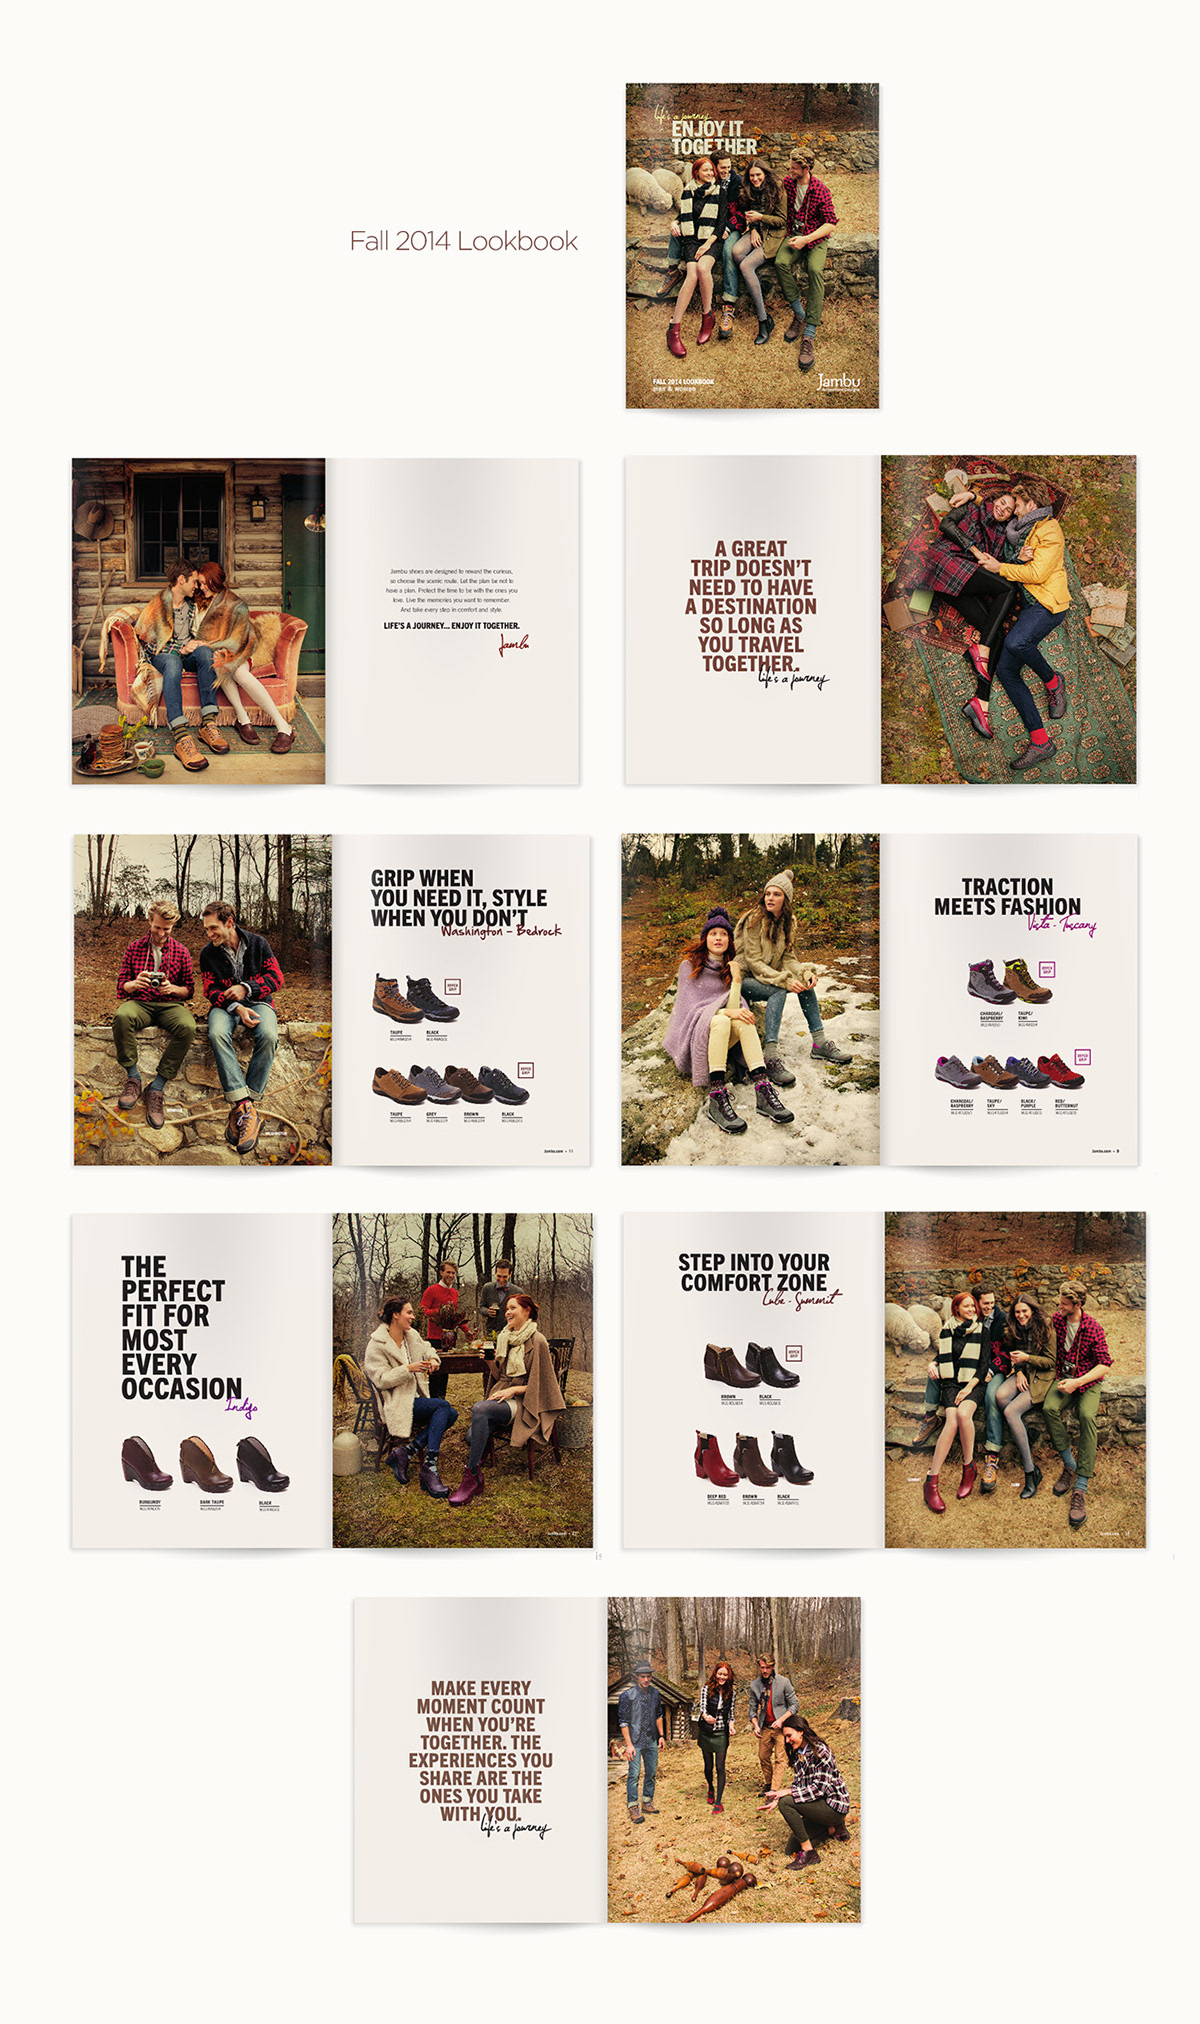 print campaign Fall Lookbook footwear lifestyle design brand ads photoshoot